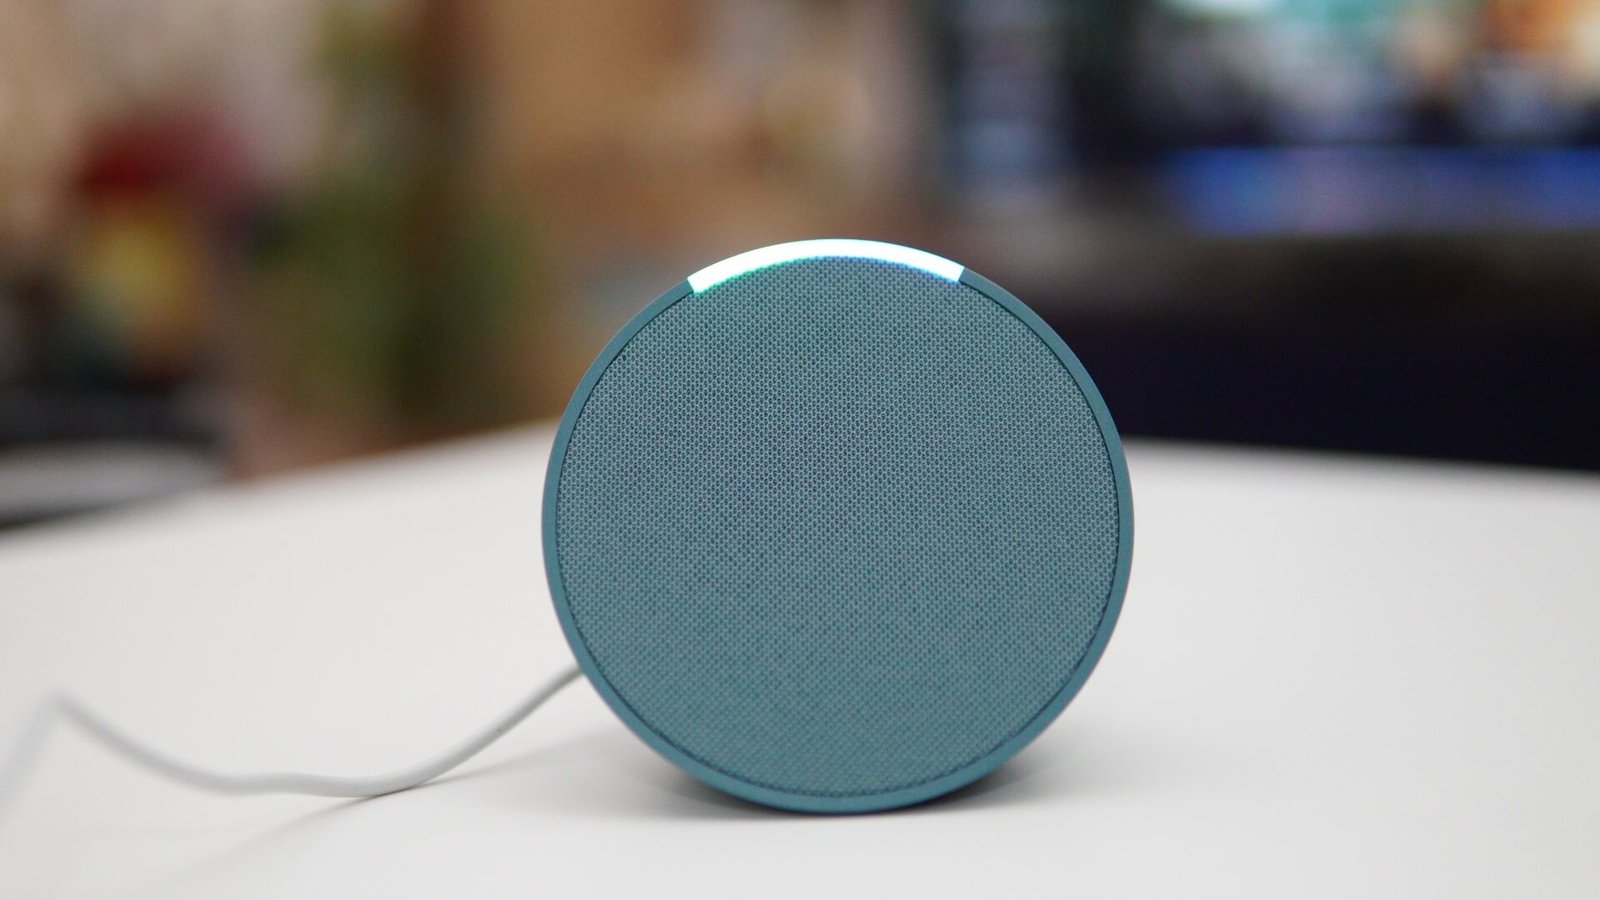 unveils Echo Pop, a compact Alexa-powered smart speaker